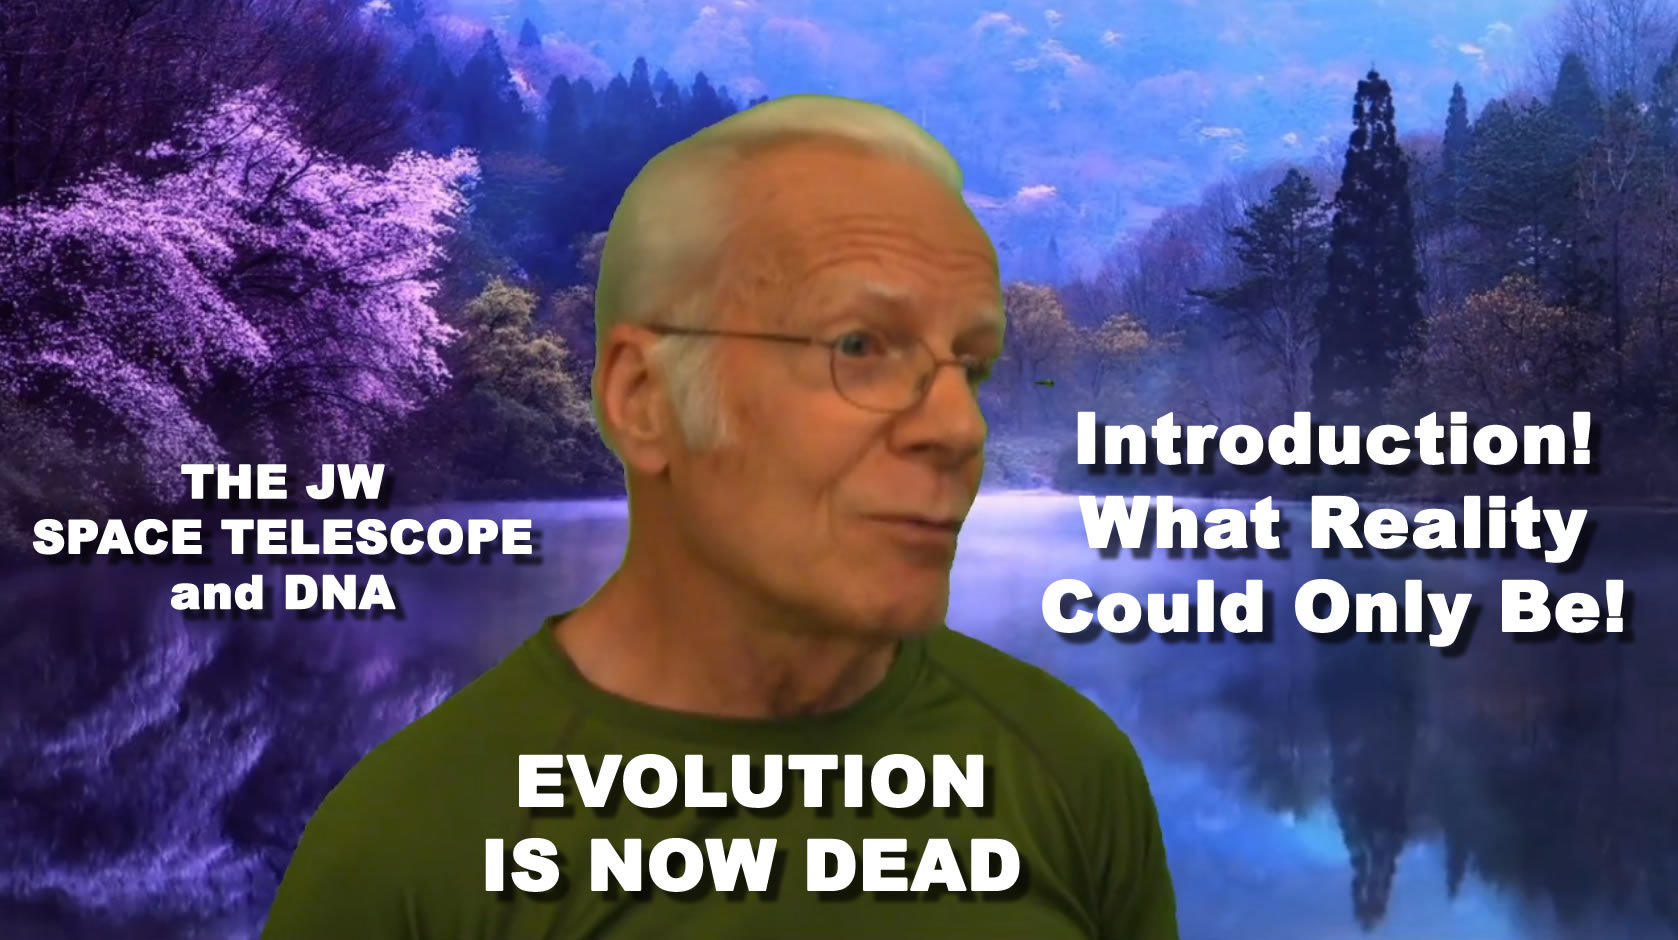 INTRODUCTION Evolution is Daad